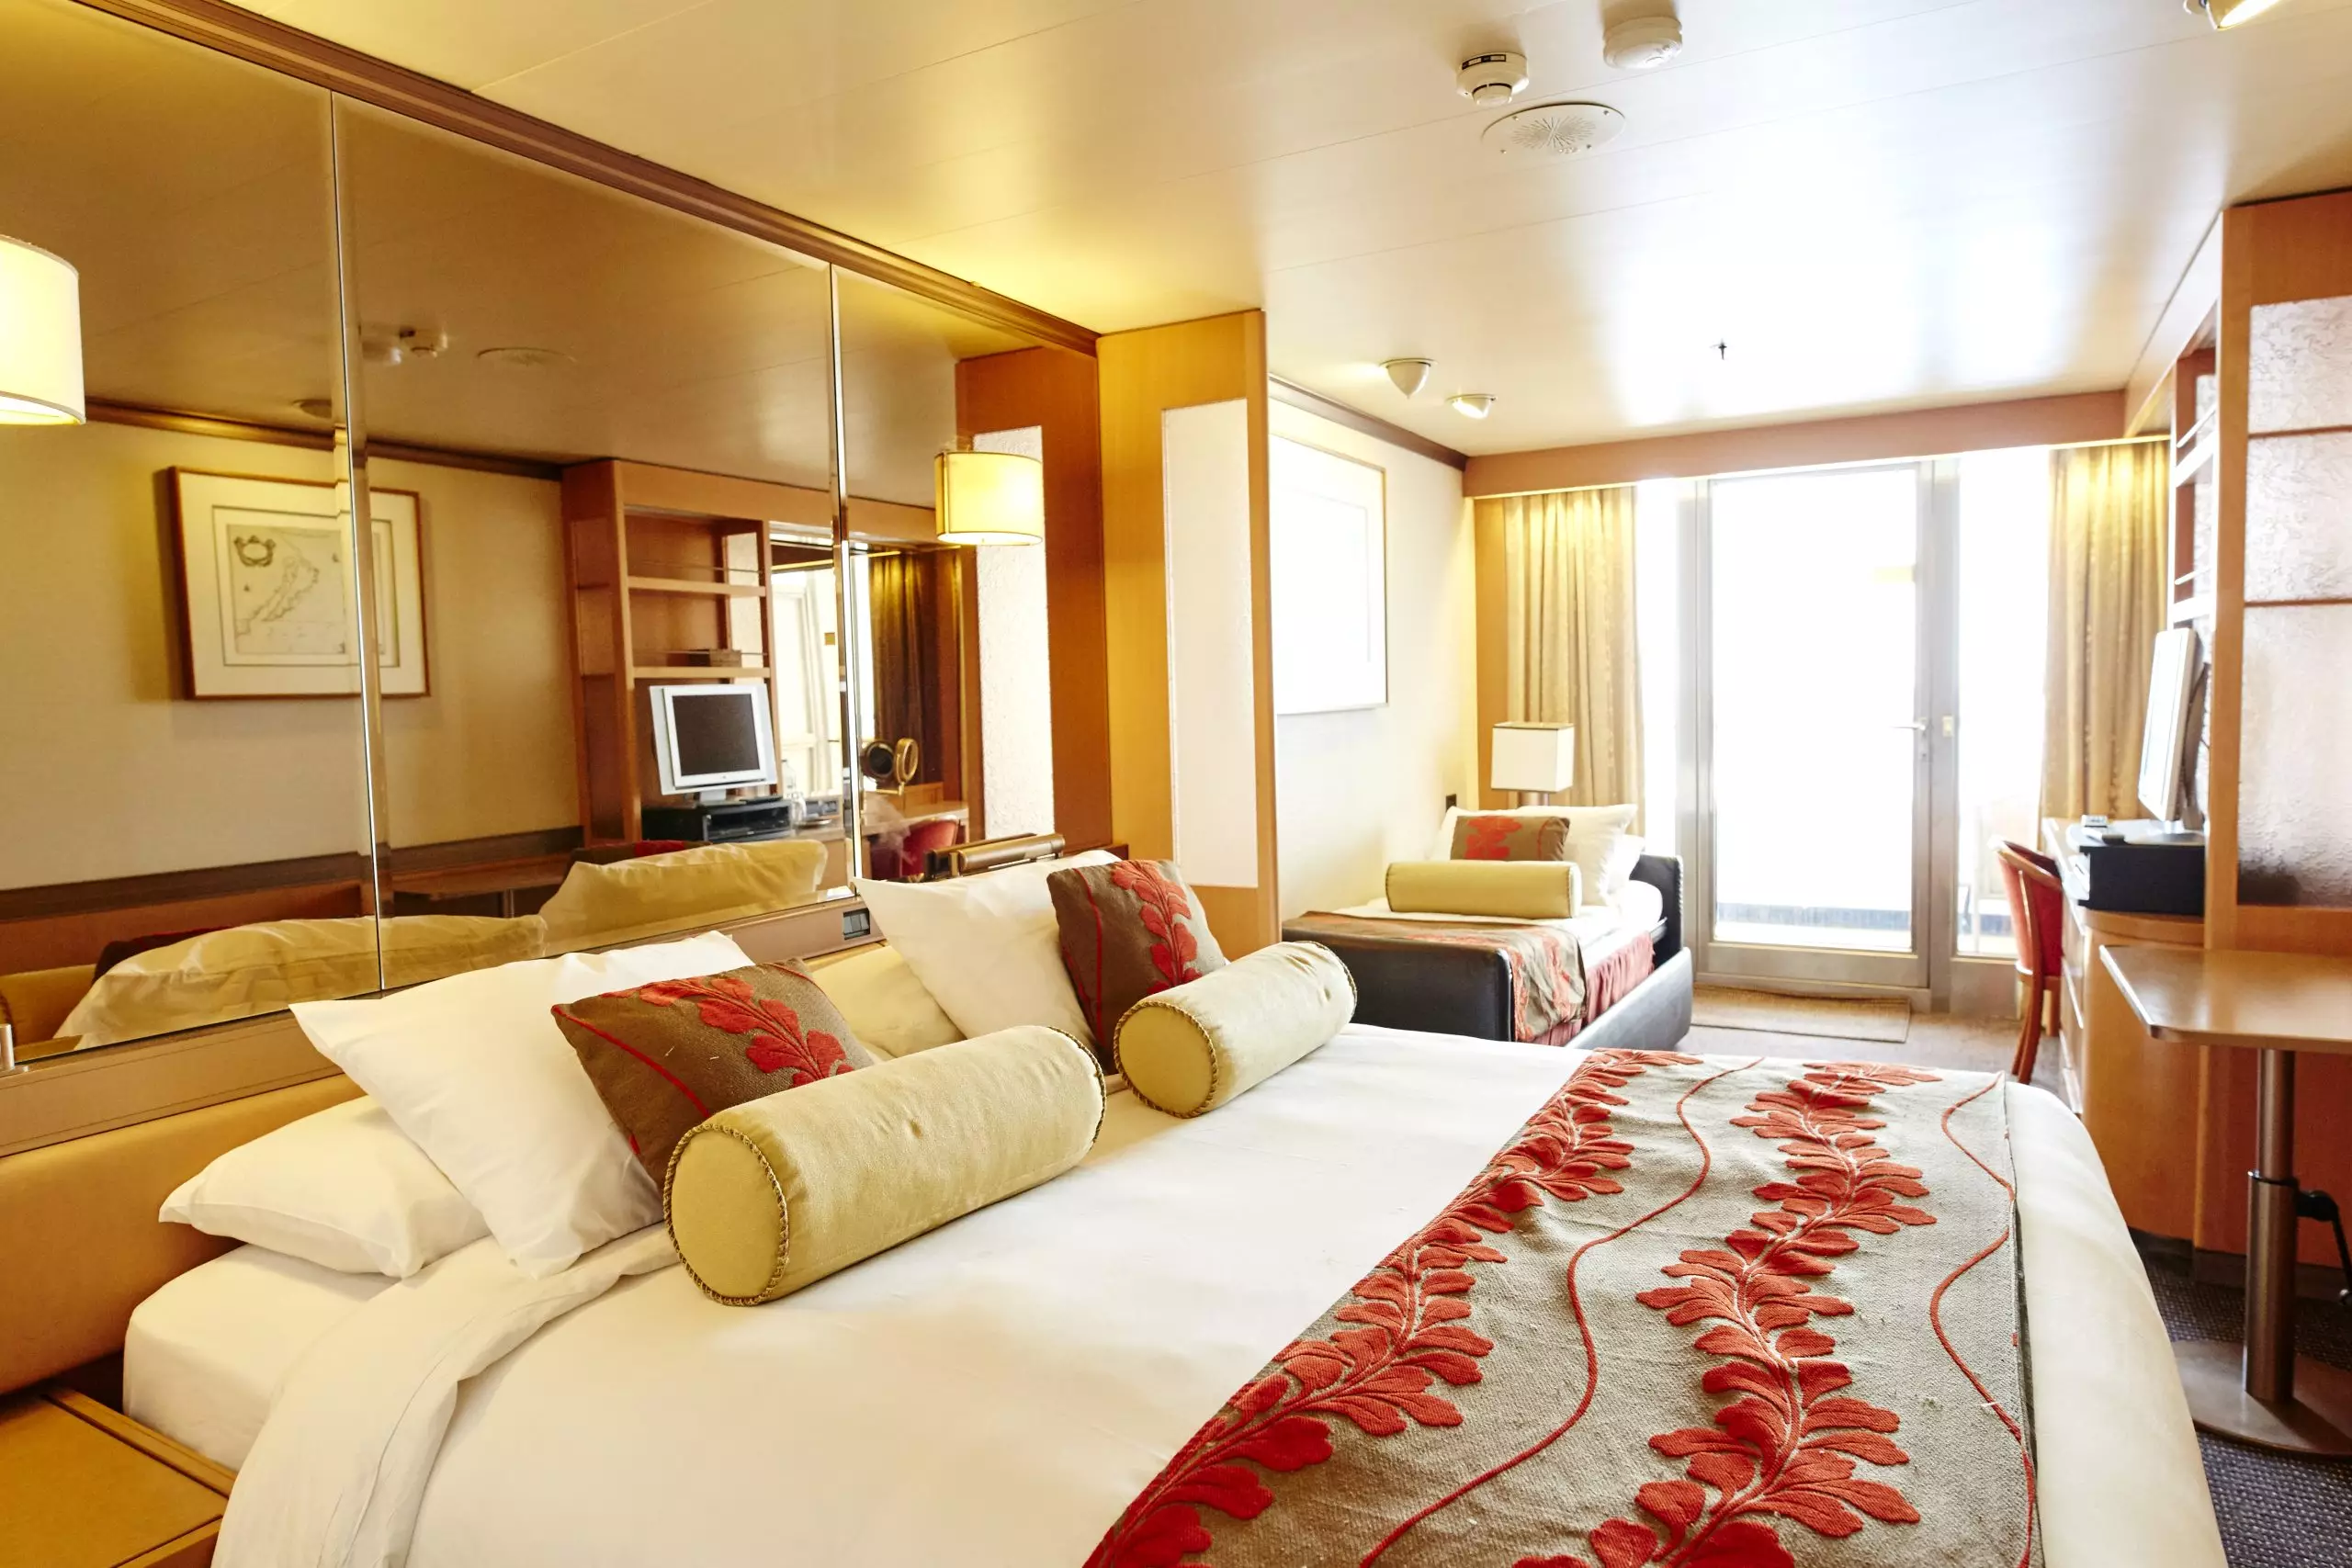 Journey_Ship_SJA balcony deck_9, SJC blacony deck_10 (double bed and single sofa bed)